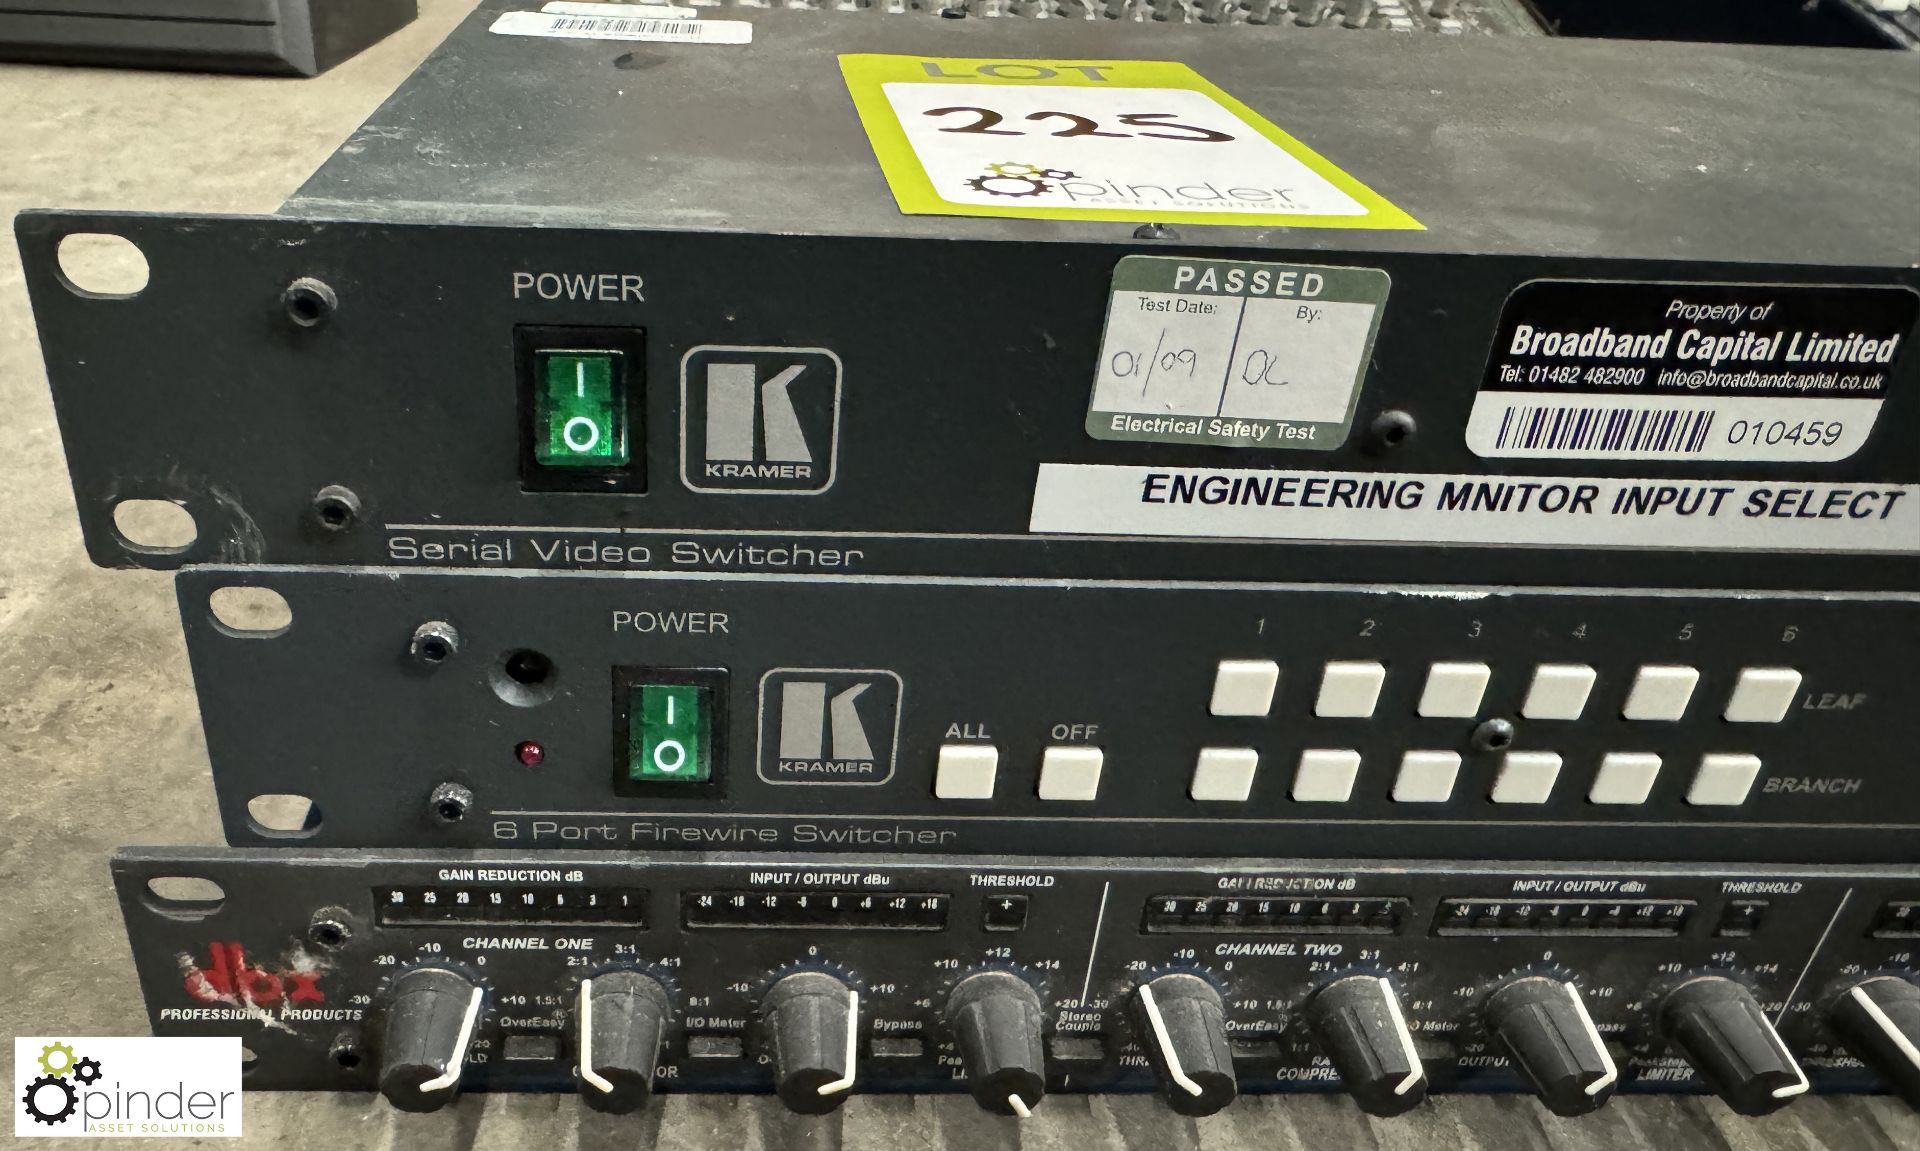 Kramer SD-7308 Serial Video Switcher, Kramer VS-66FW 8-port Firewire Switcher and DBX 1646 Quad - Bild 2 aus 4